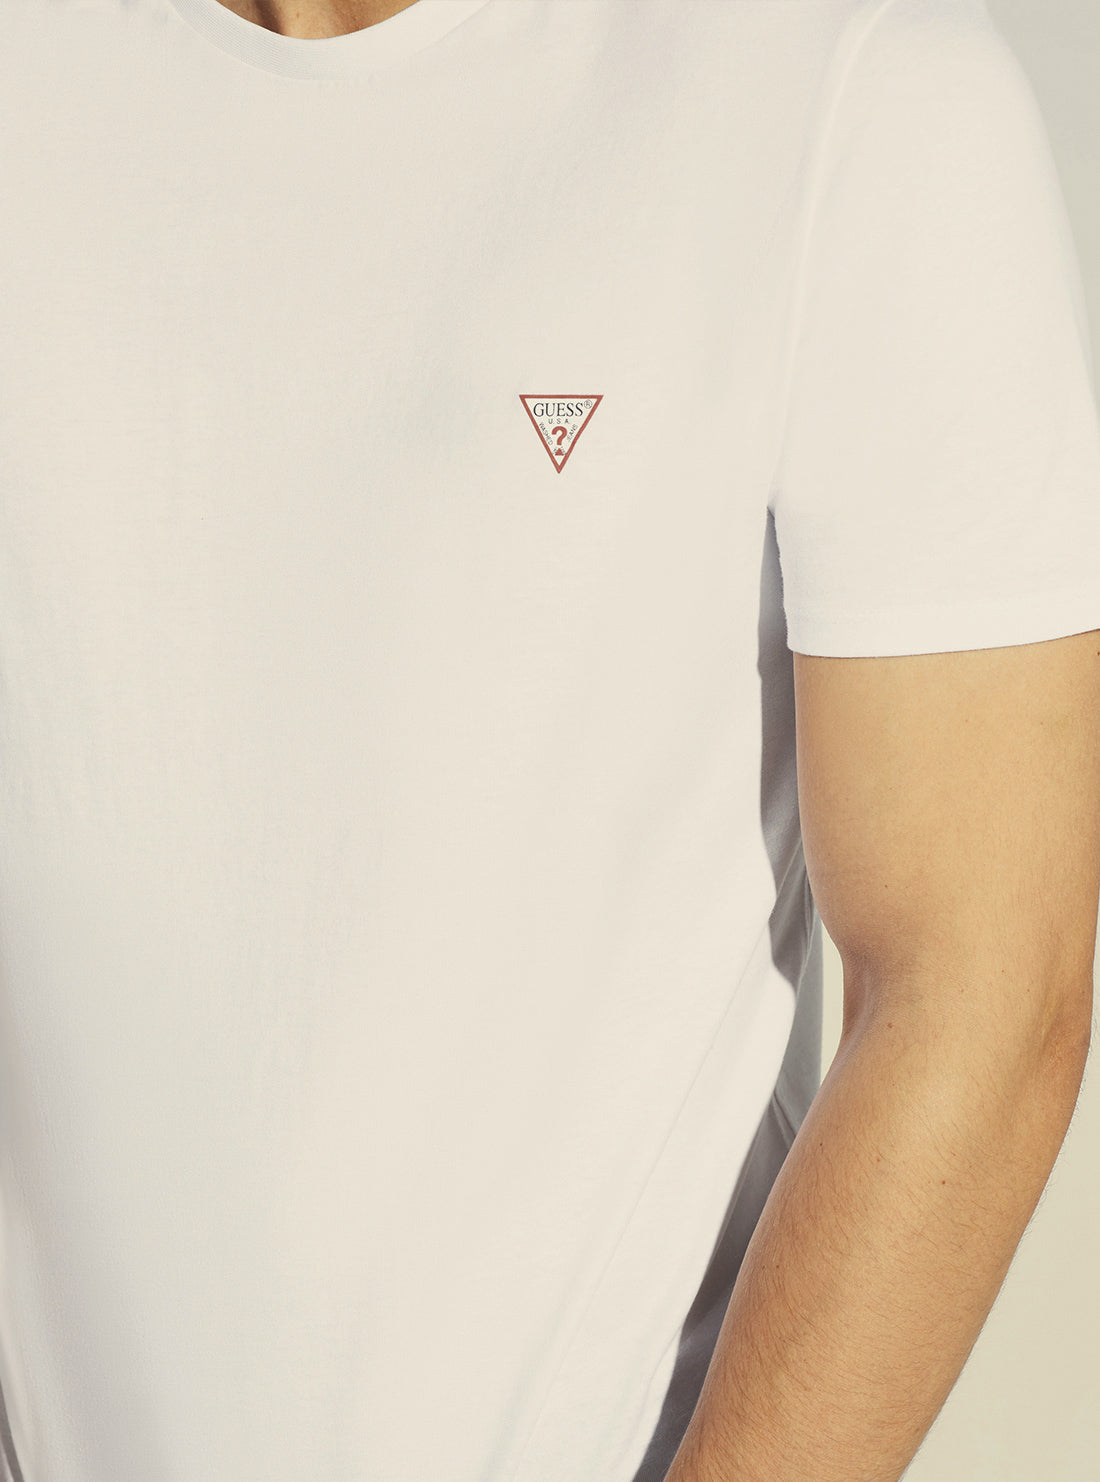 GUESS Men's White Core Logo T-Shirt M2YI36I3Z11 Logo View